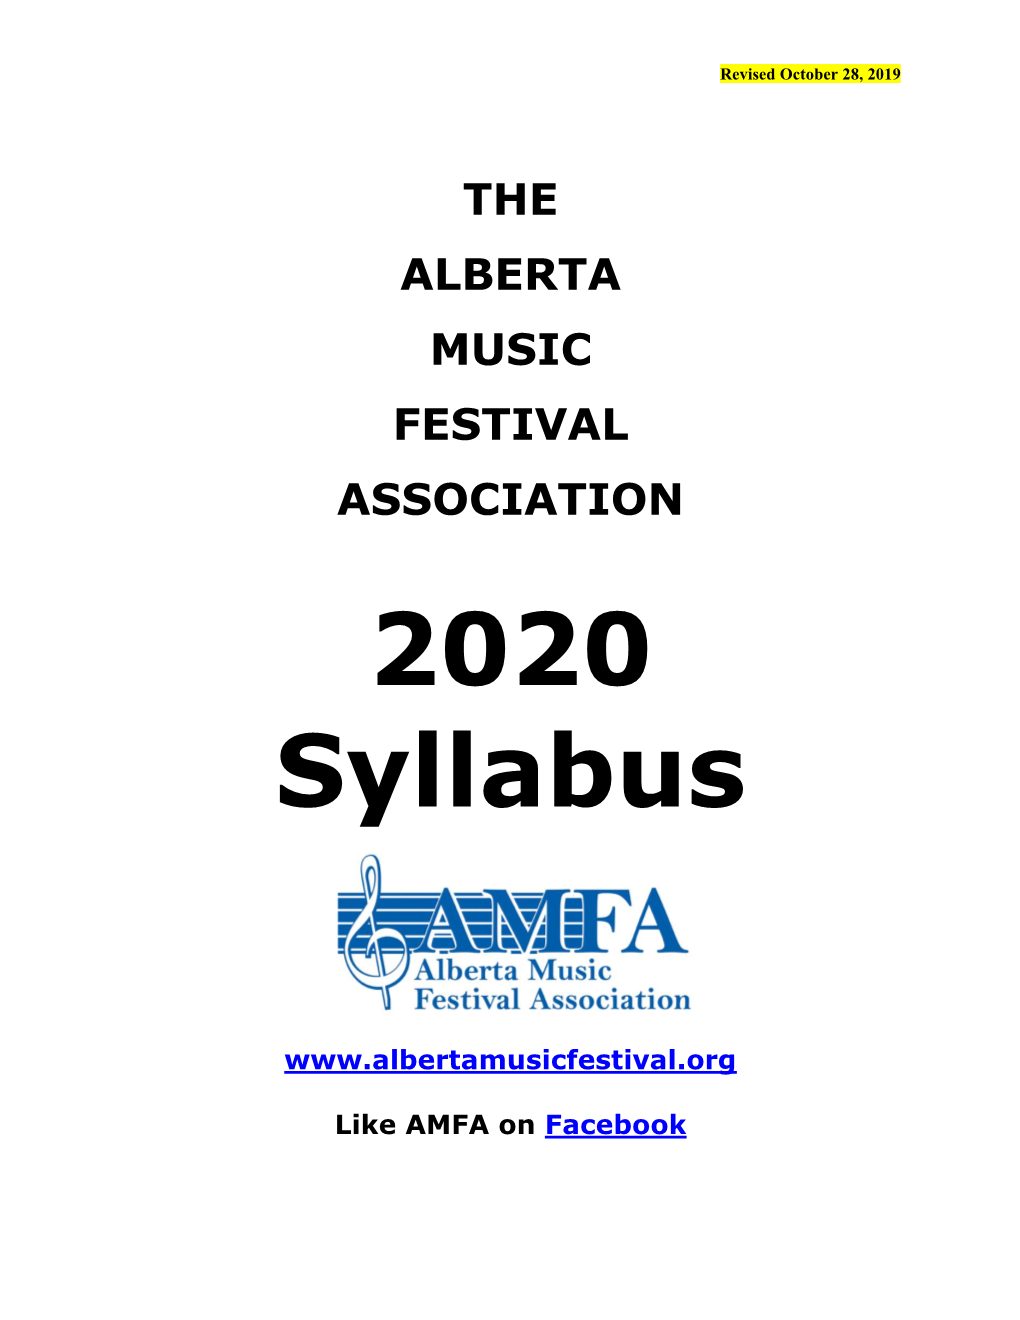 The Alberta Music Festival Association